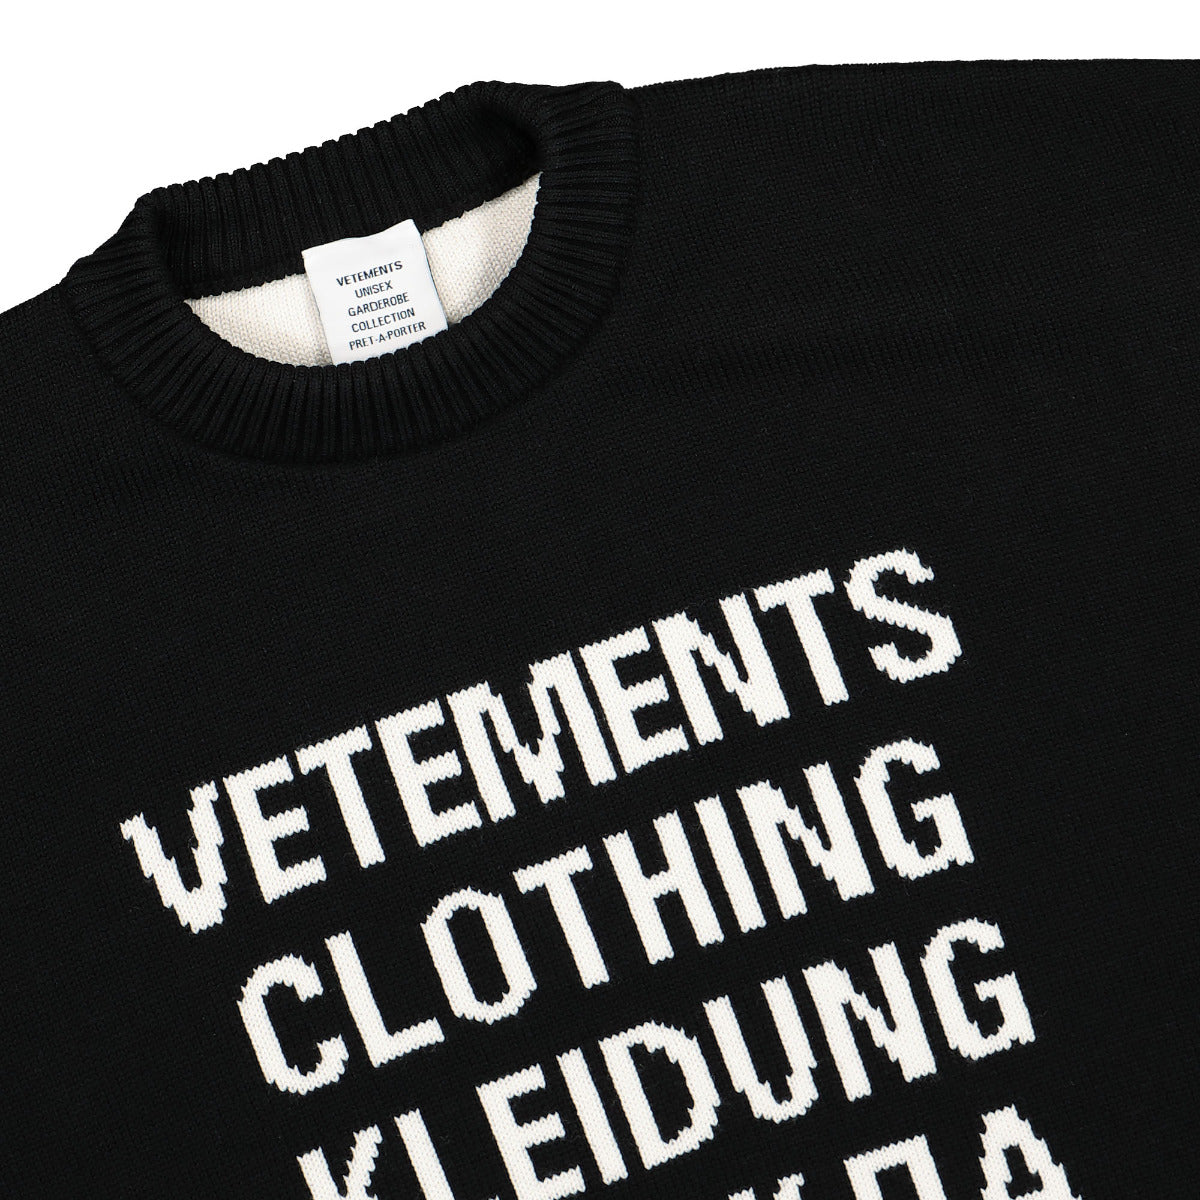 VETEMENTS Black Translation Sweater